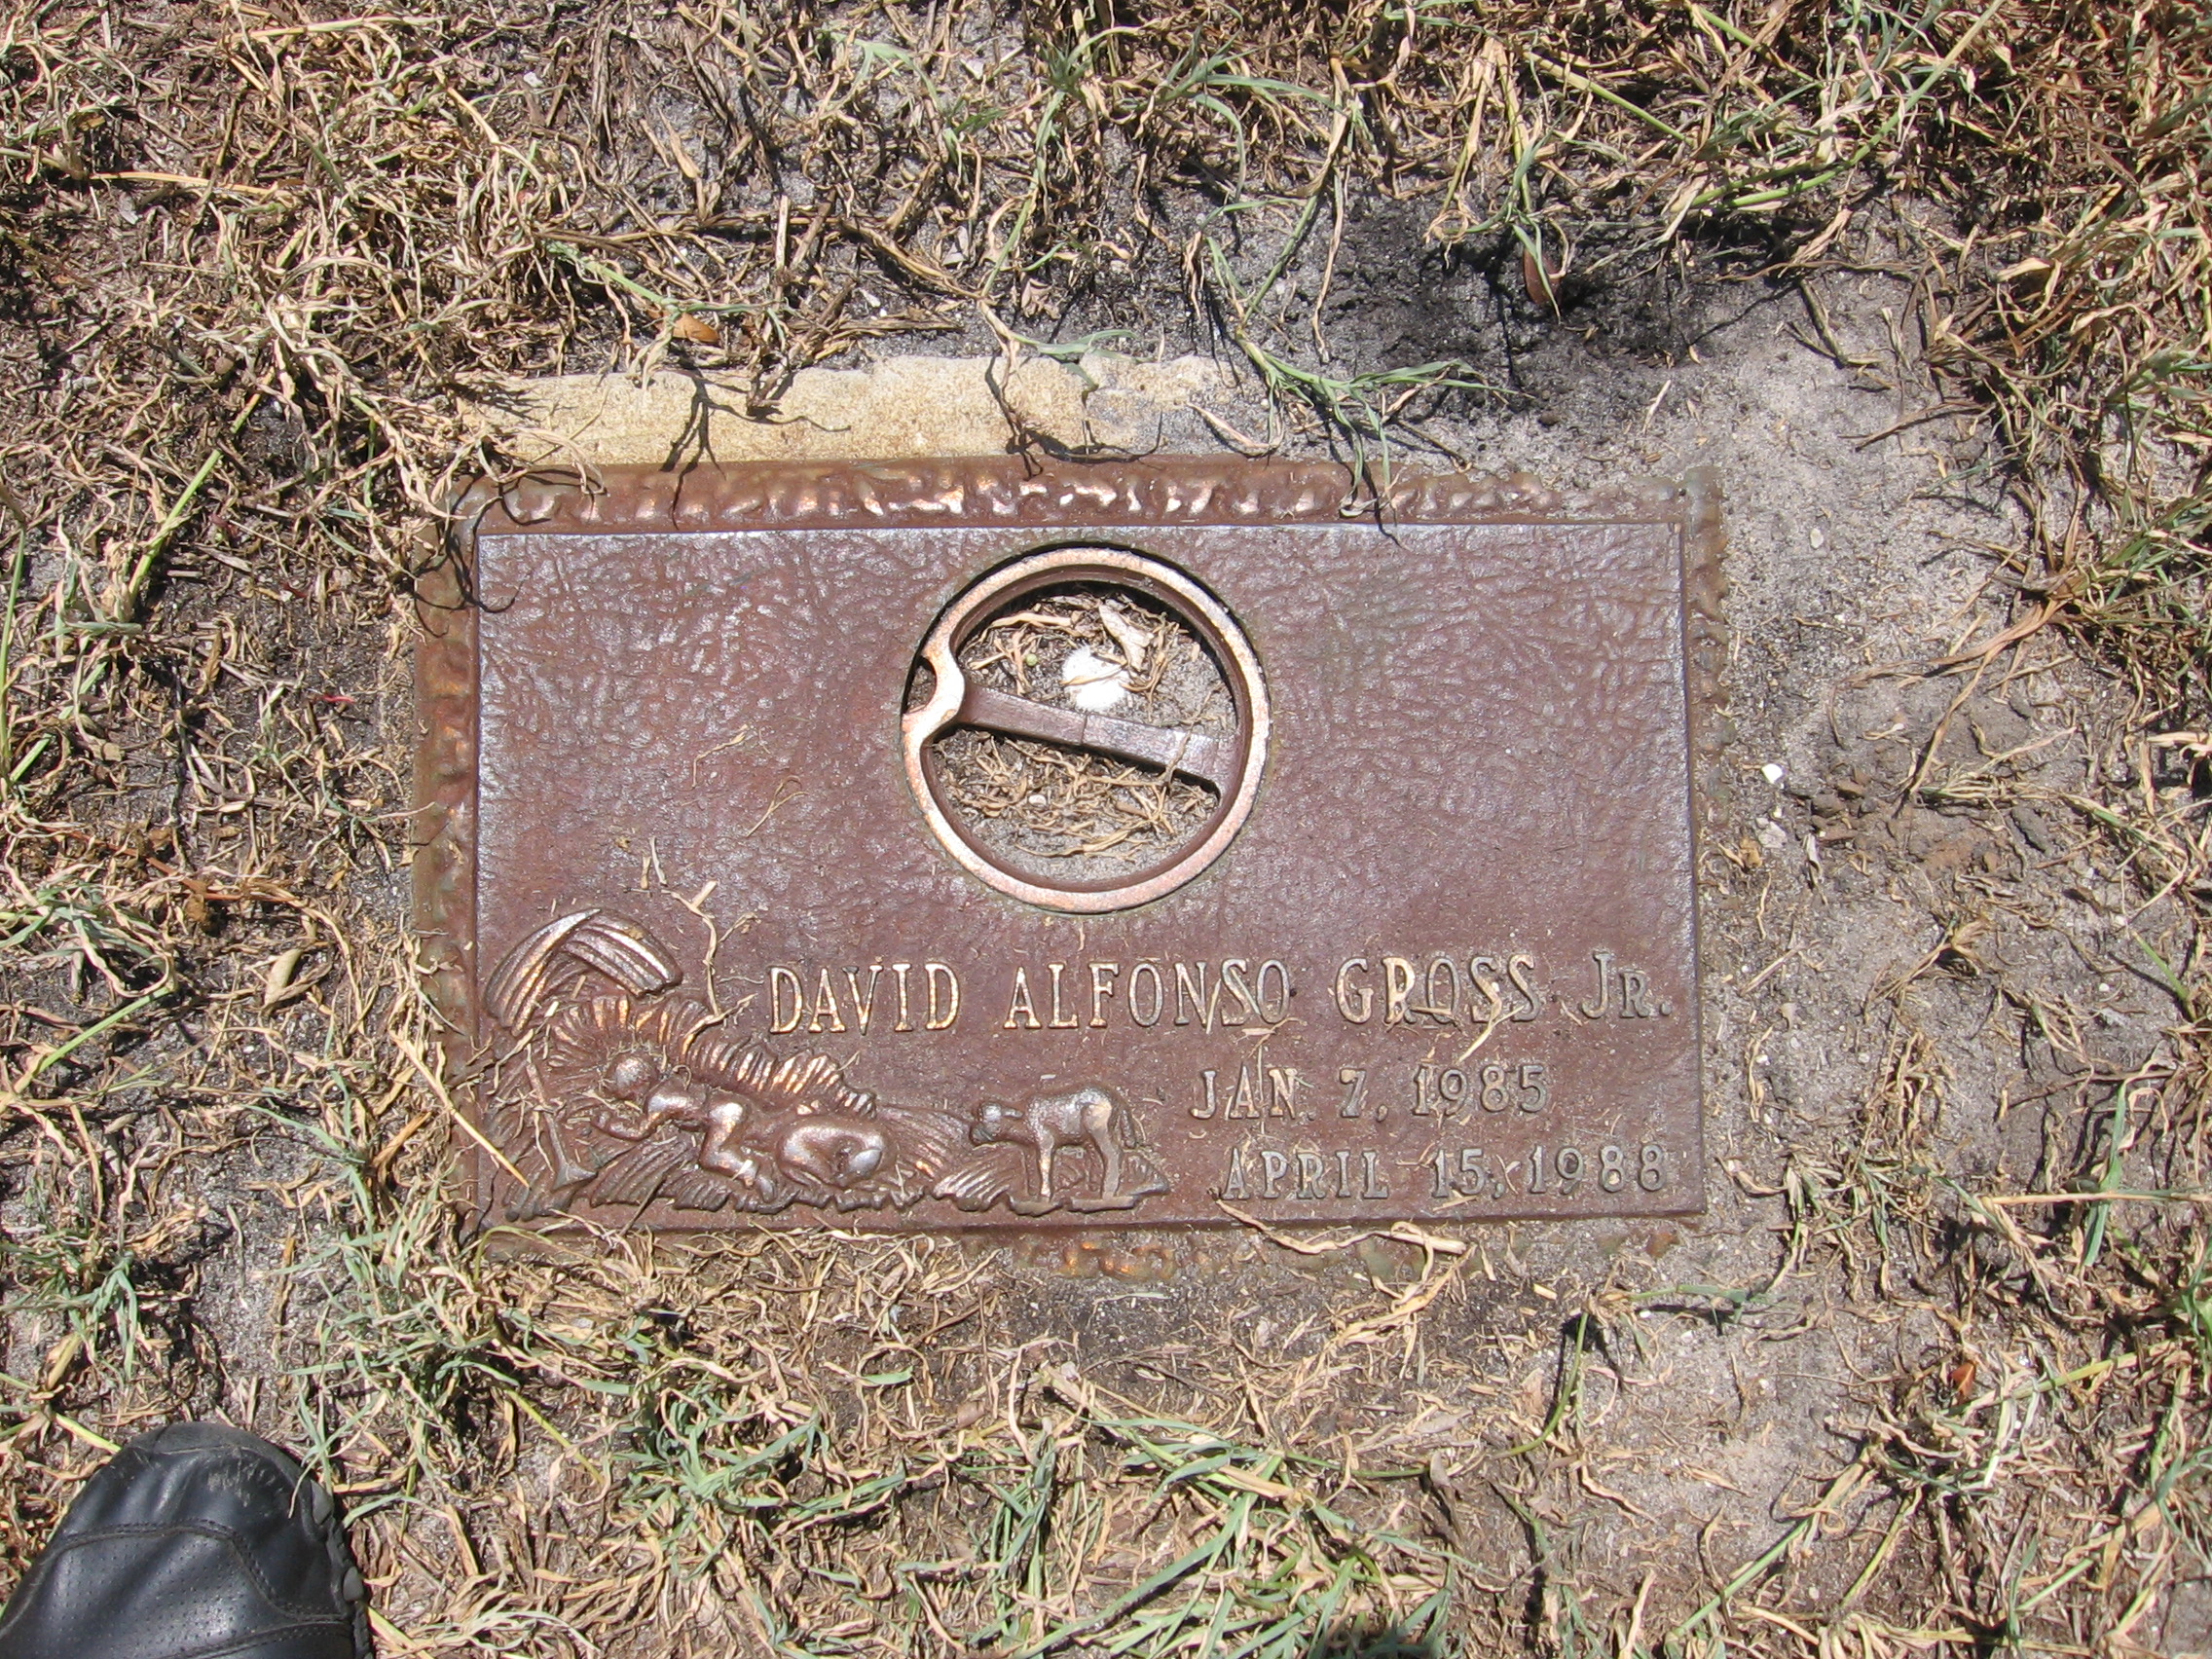 David Alfonso Gross, Jr